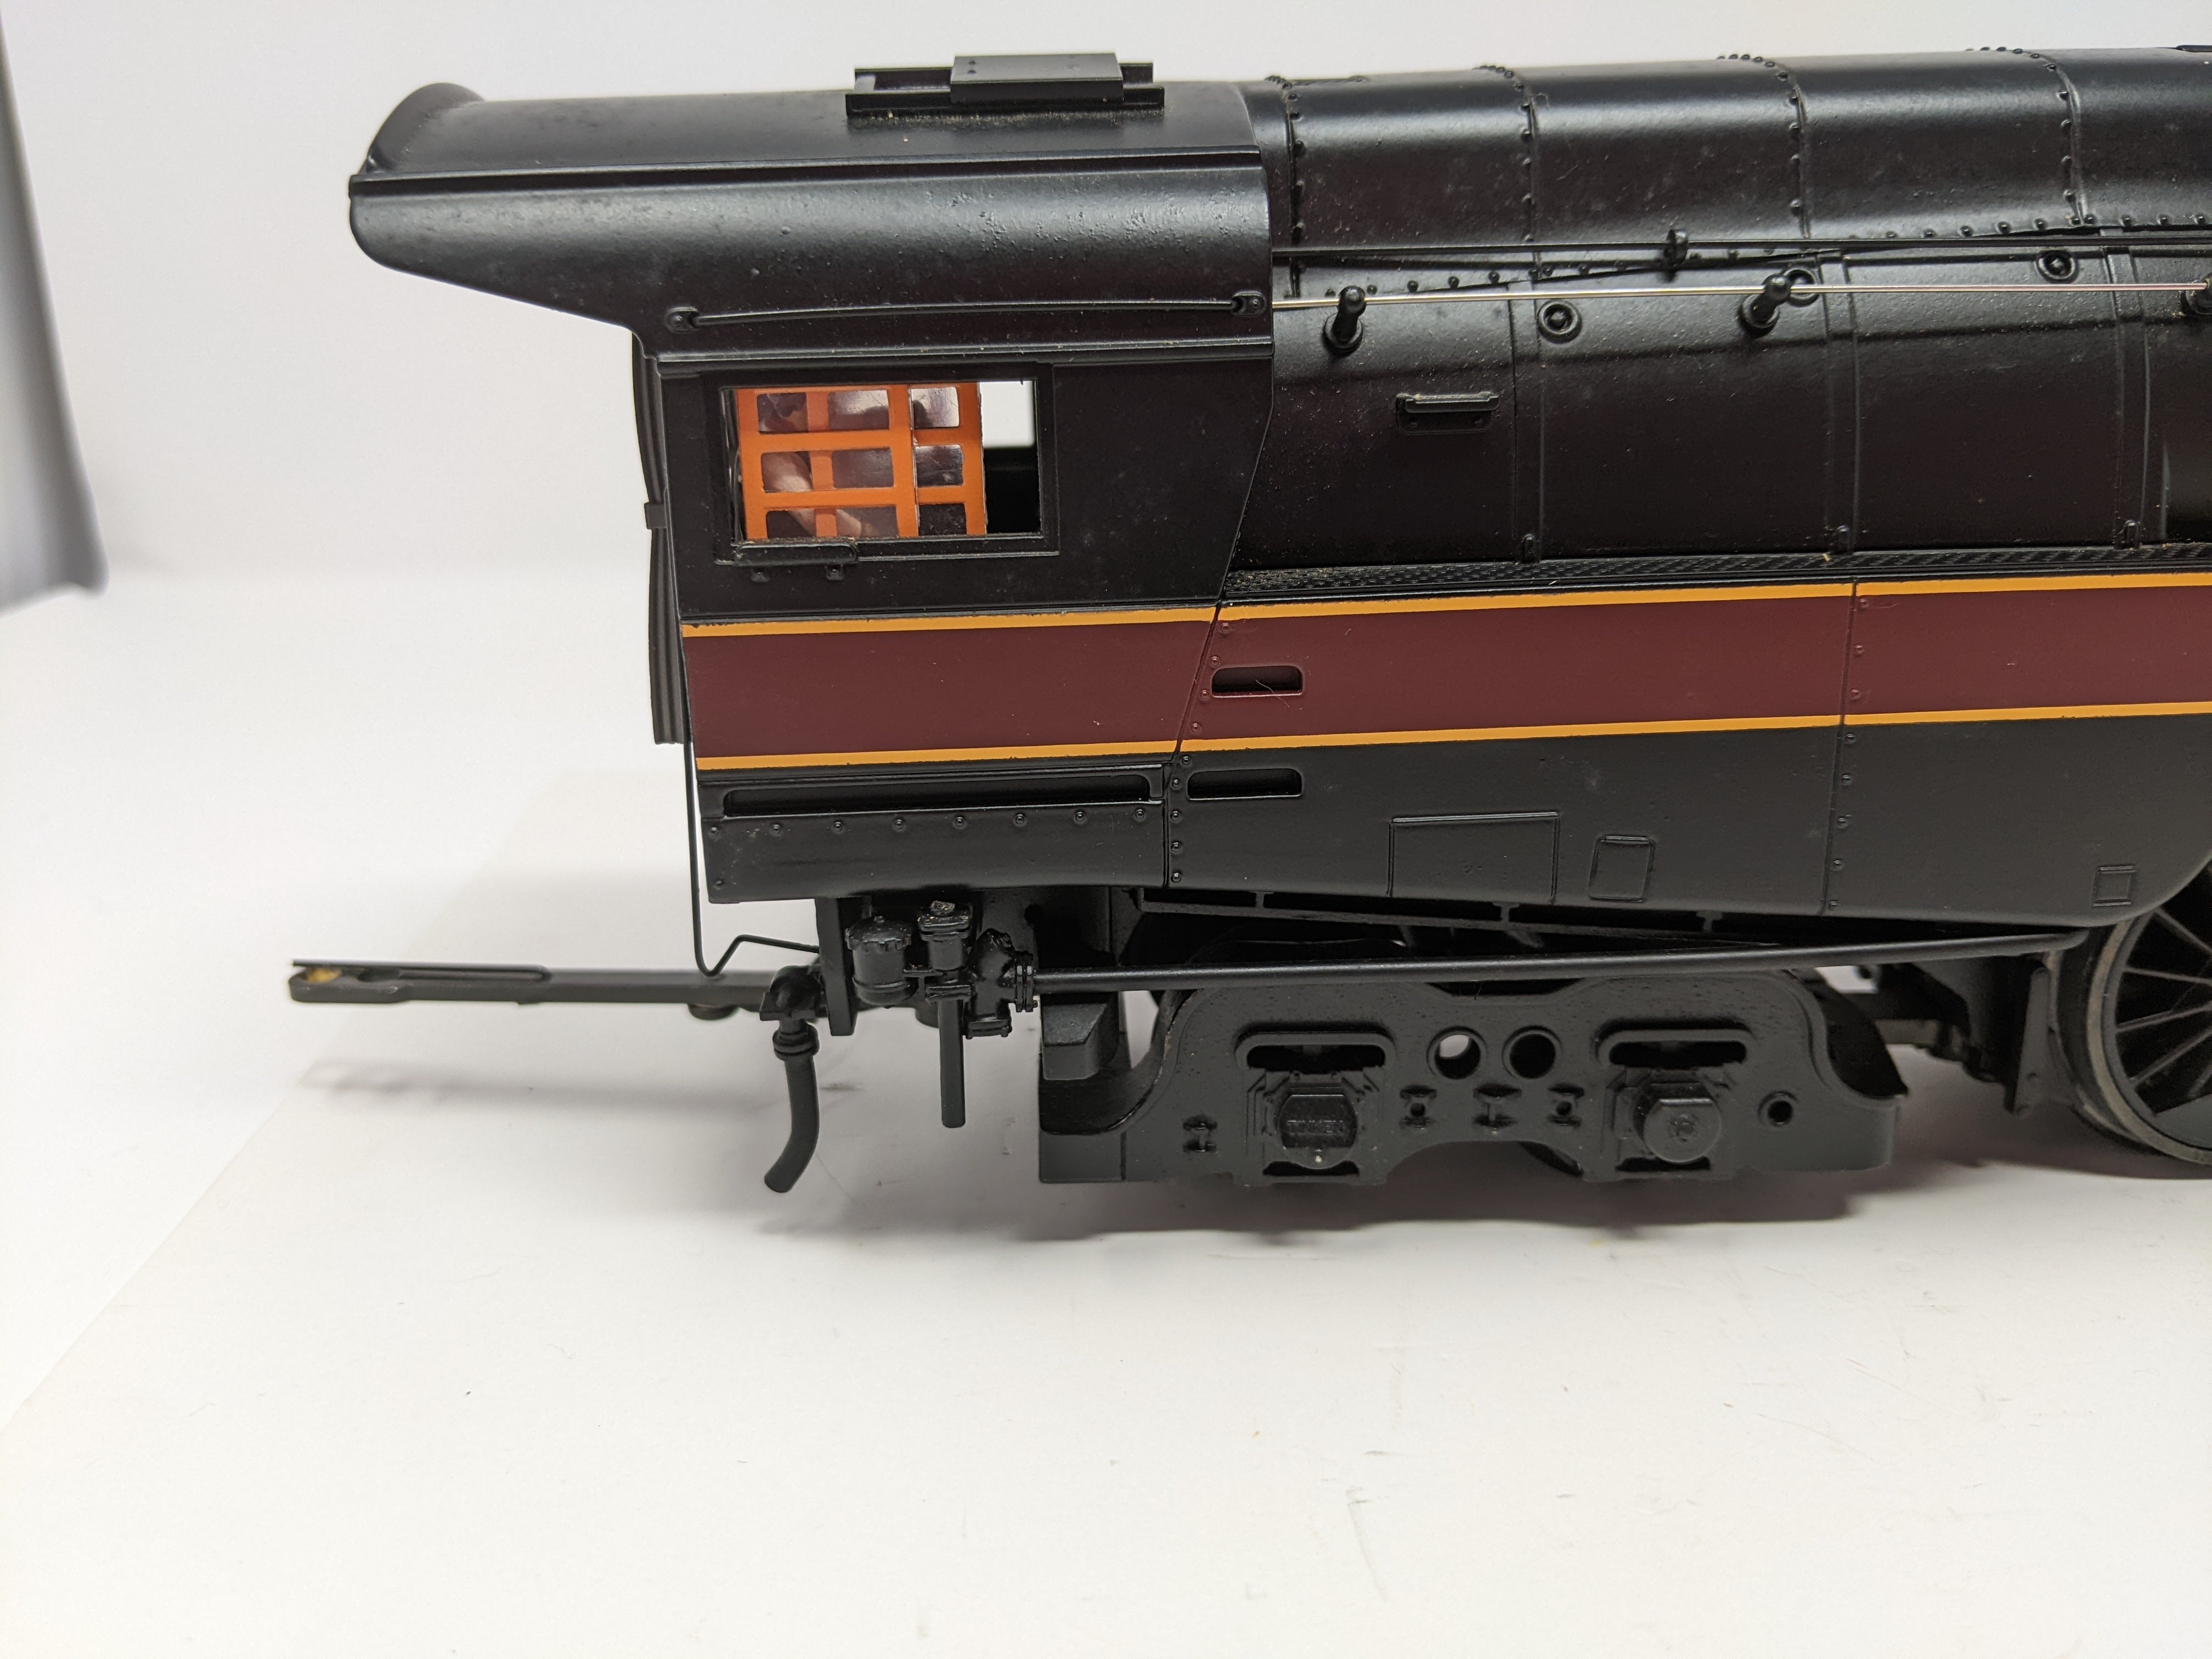 USED MTH Premier 20-3132-1 O, 4-8-4 Class J Steam Engine, Norfolk & Western #611 (Proto-Sound 2.0)